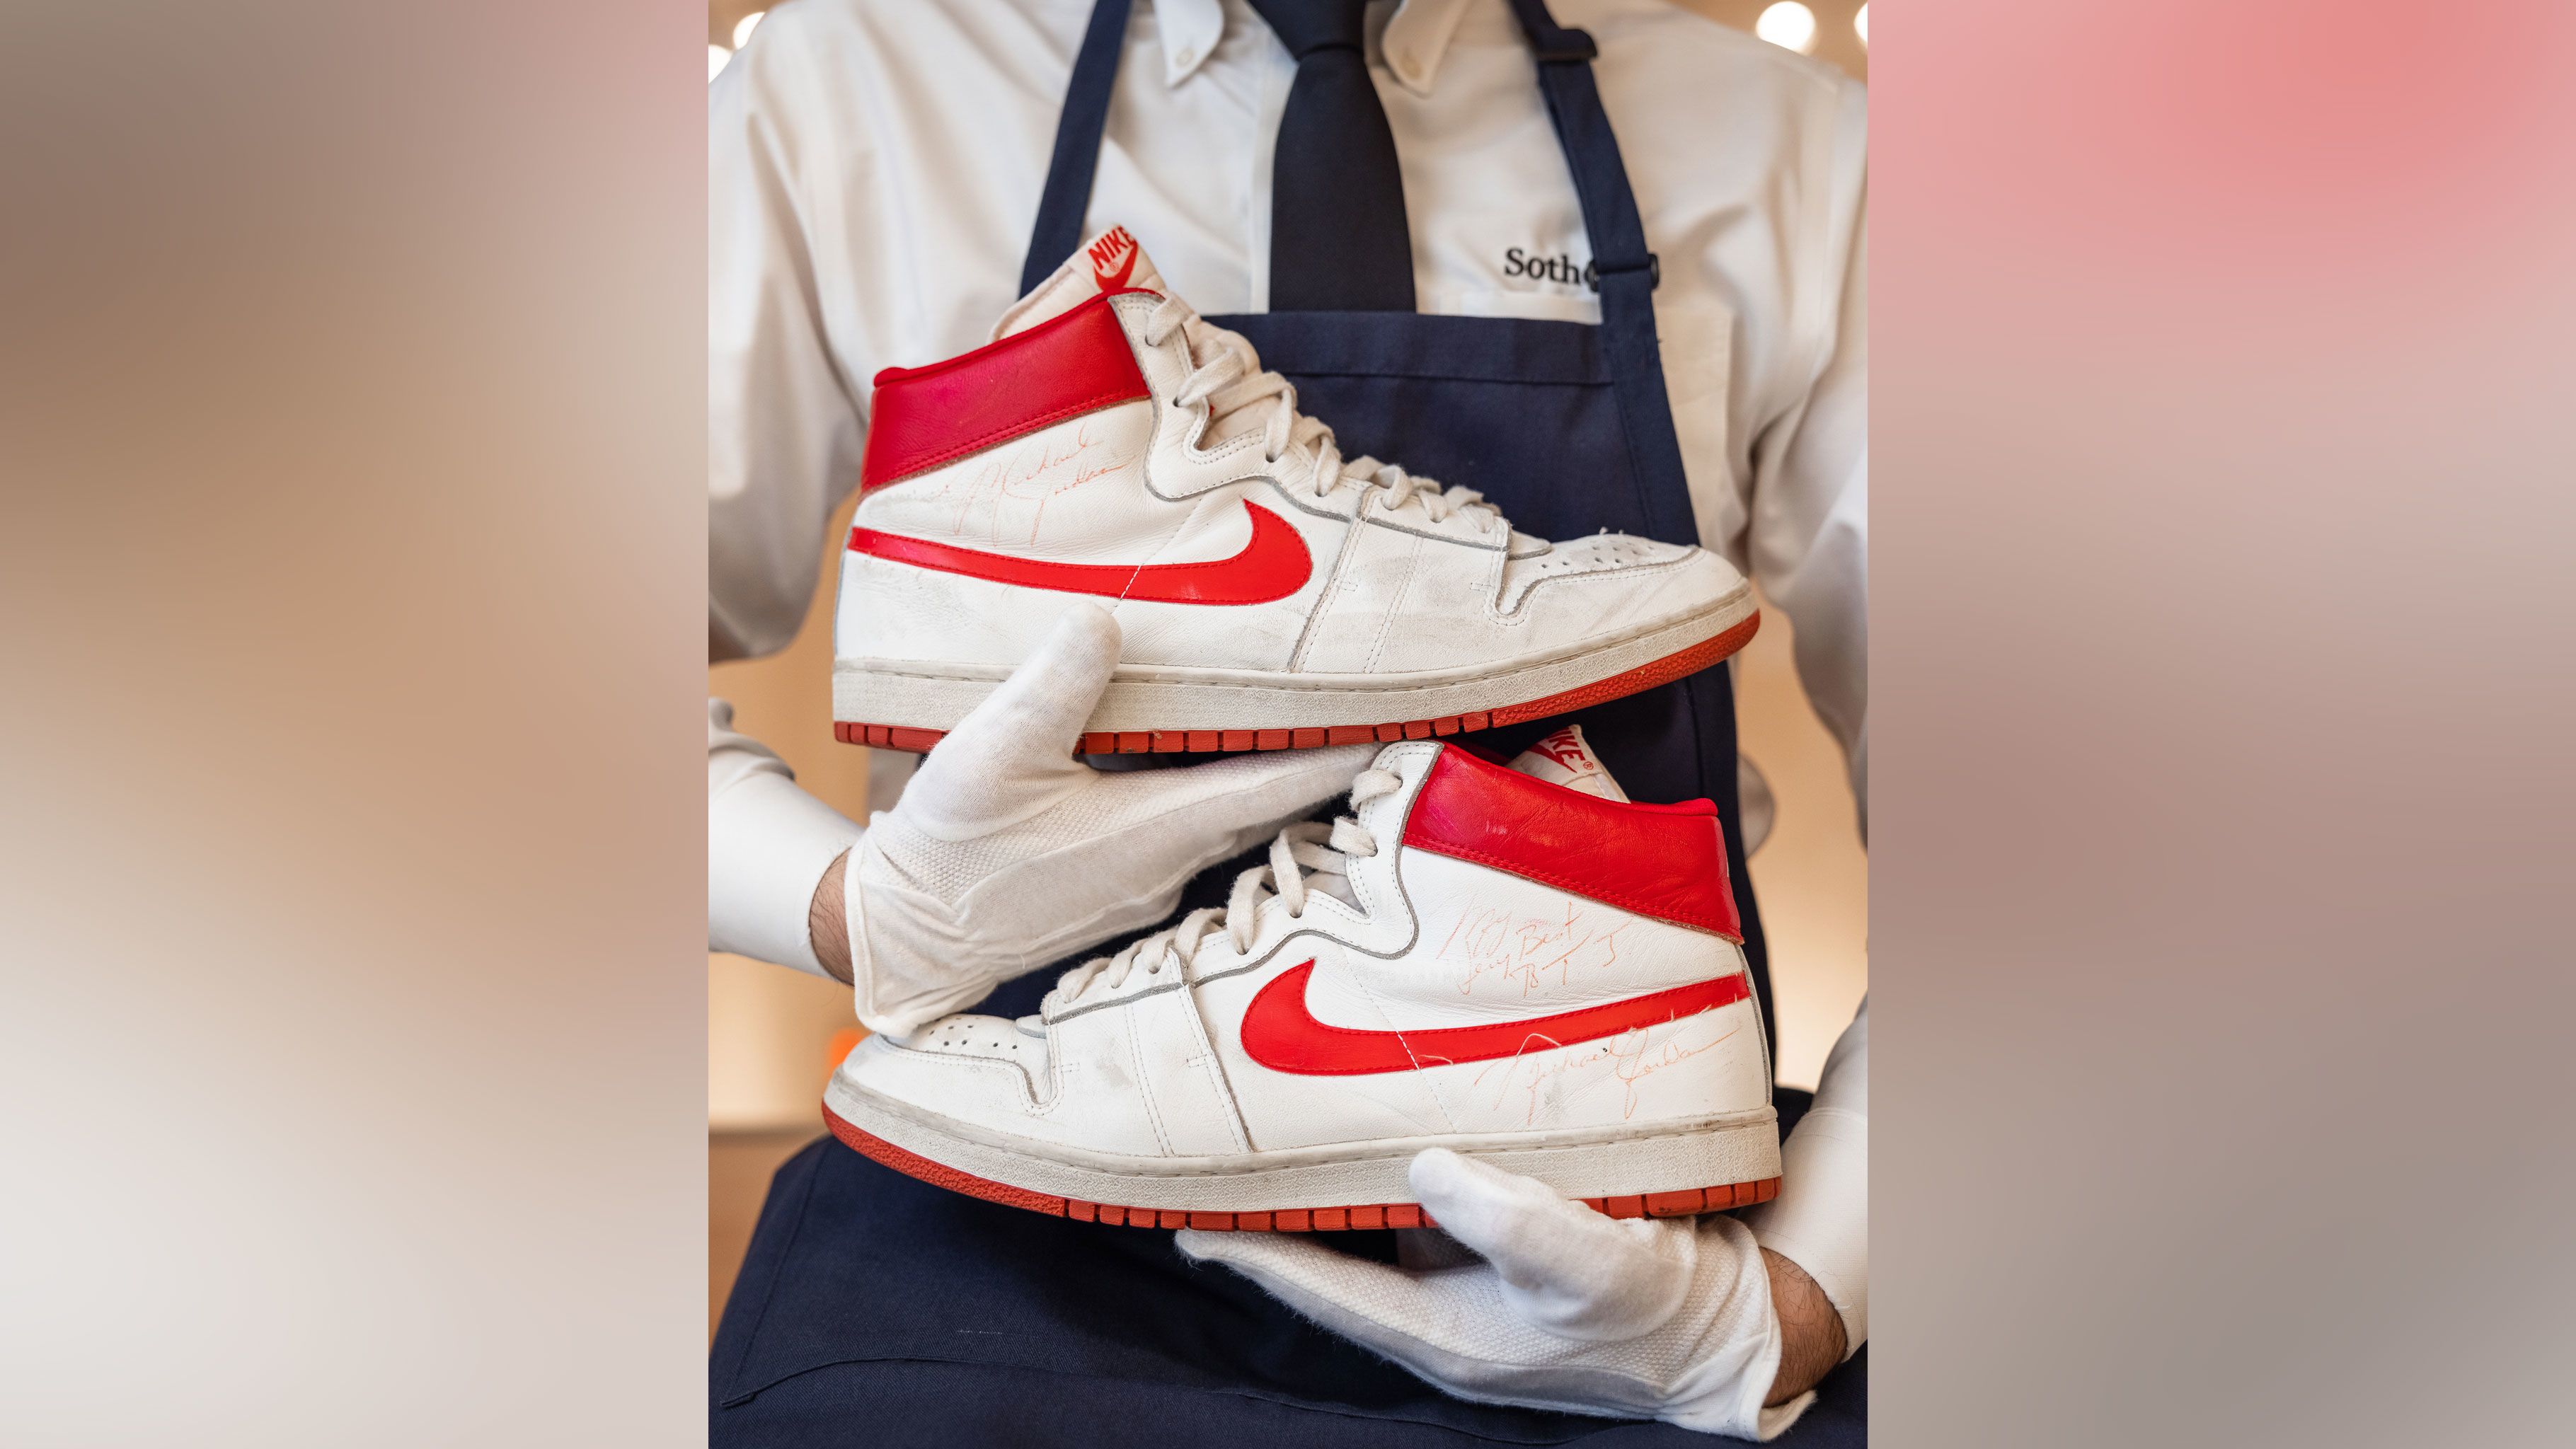 Michael Jordan's sneakers sell $1.47 million | CNN